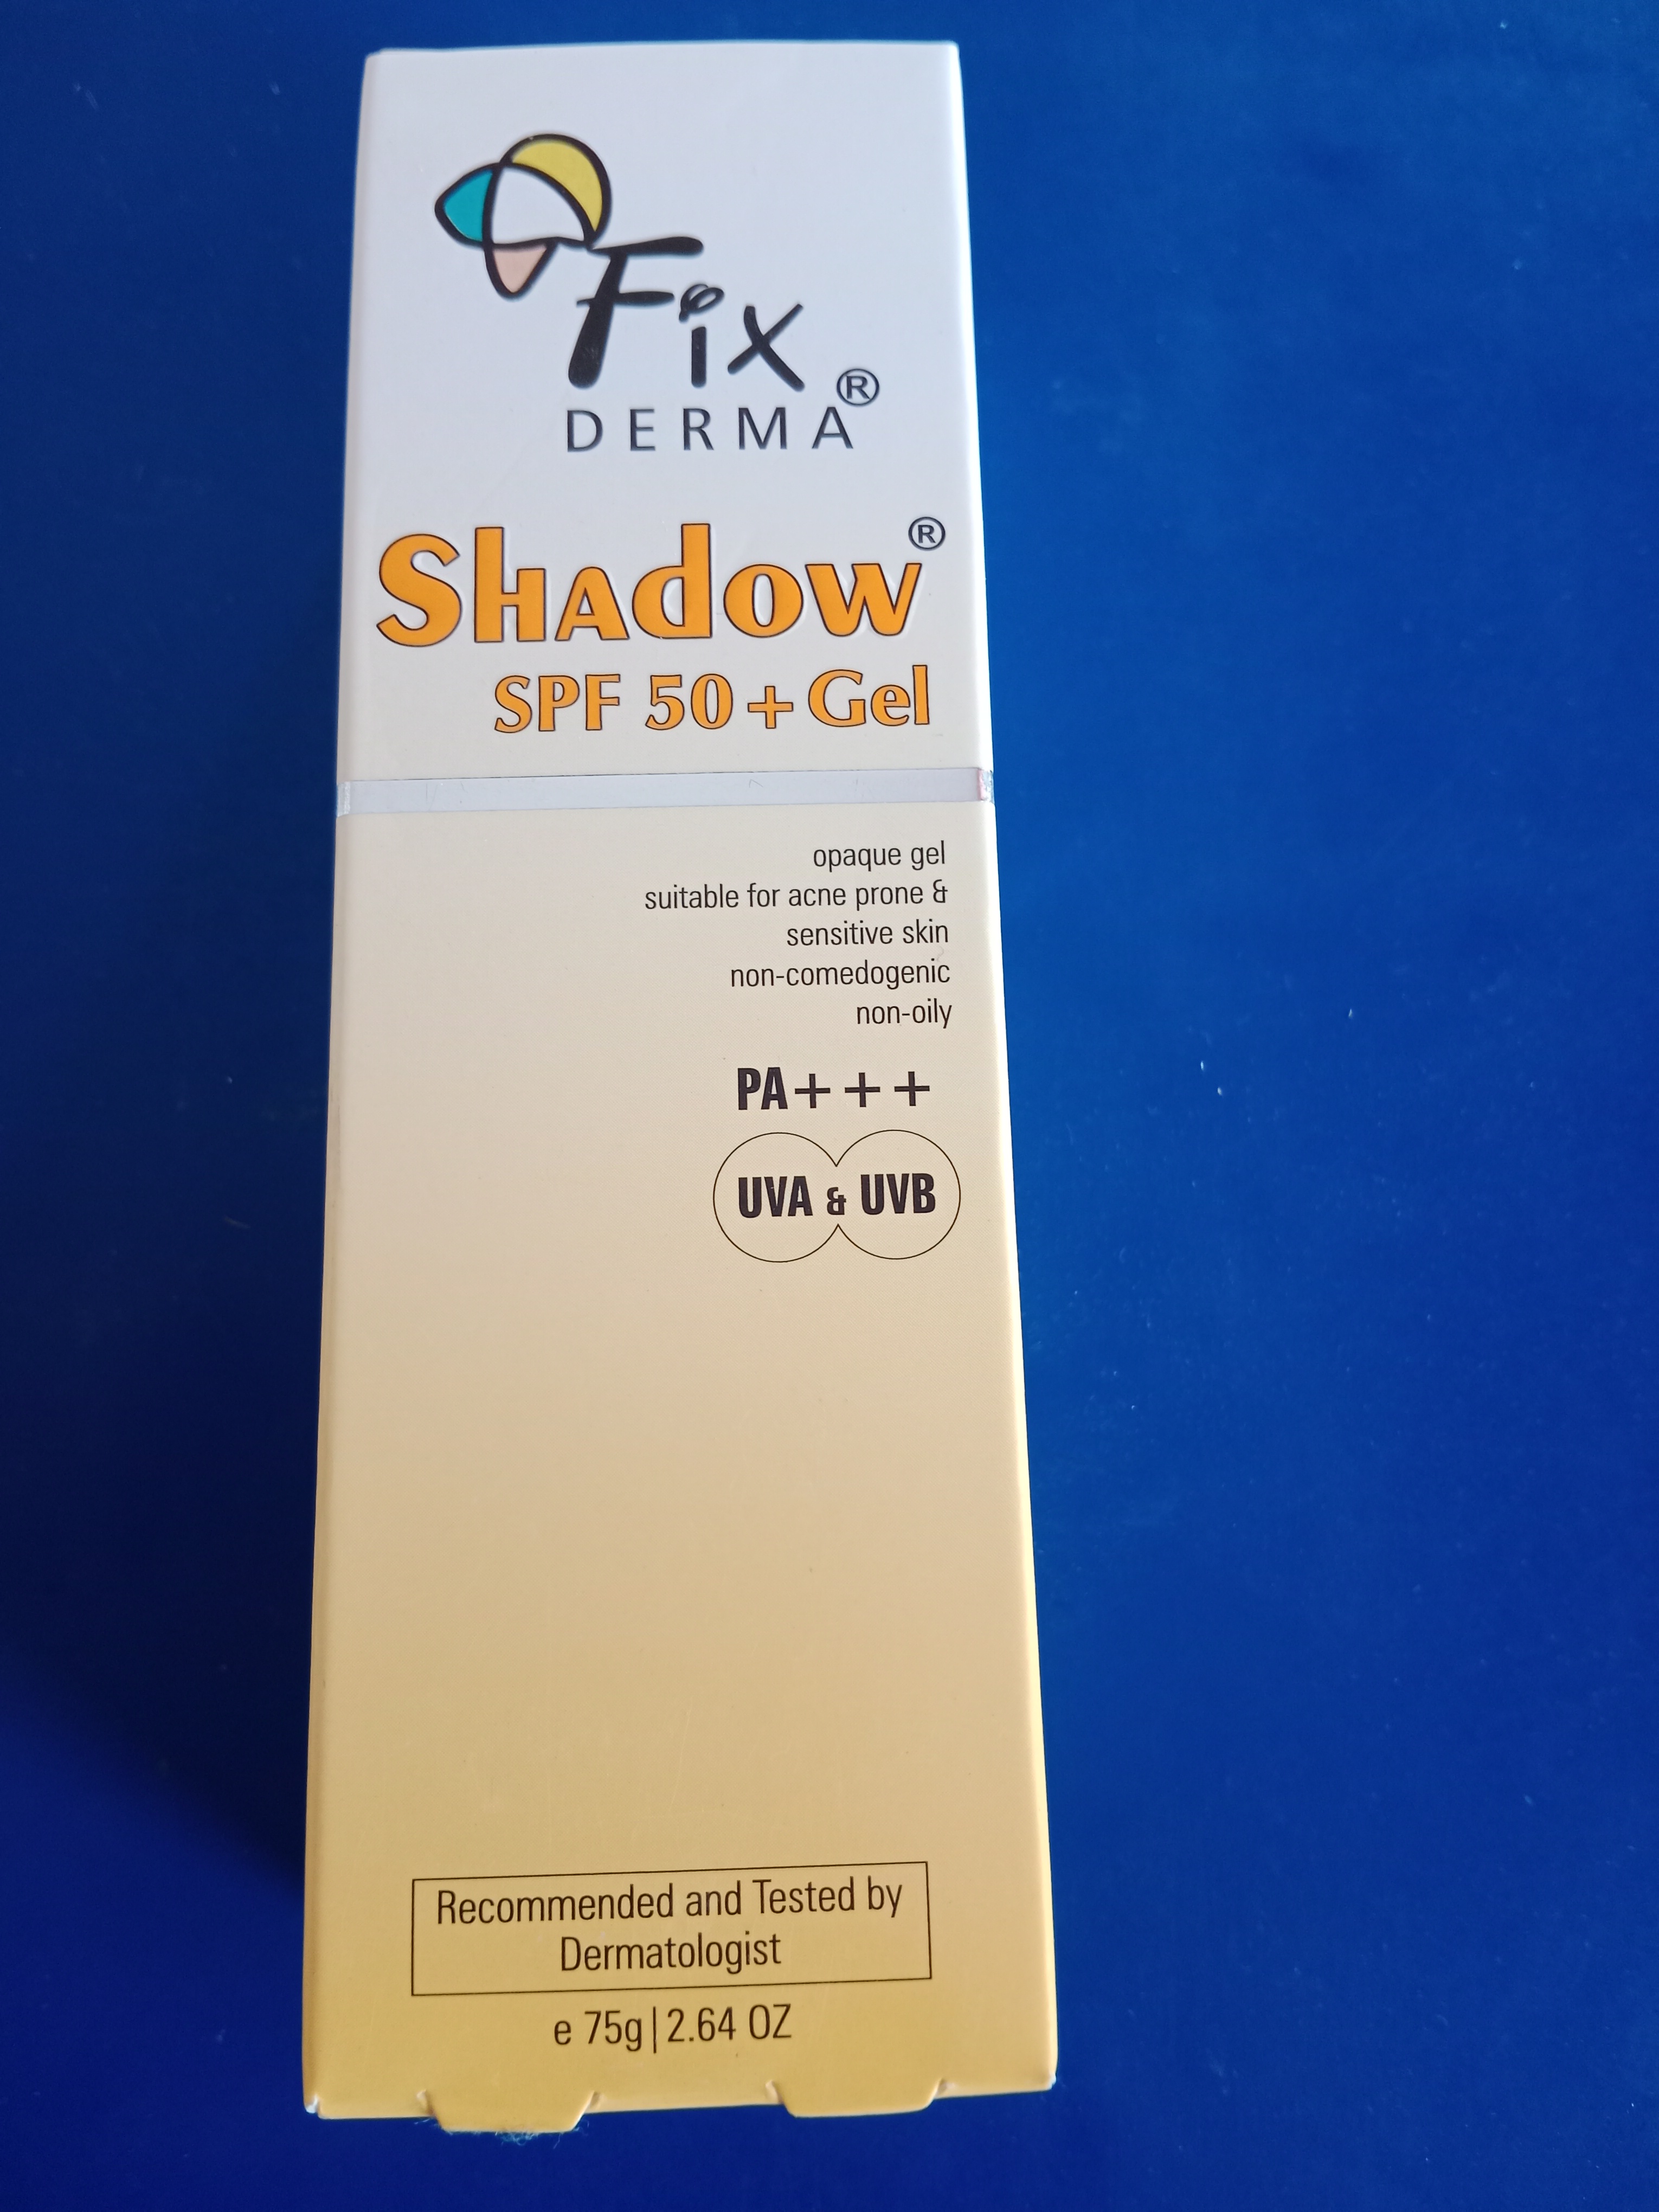 Fixderma shadow spf 50+...